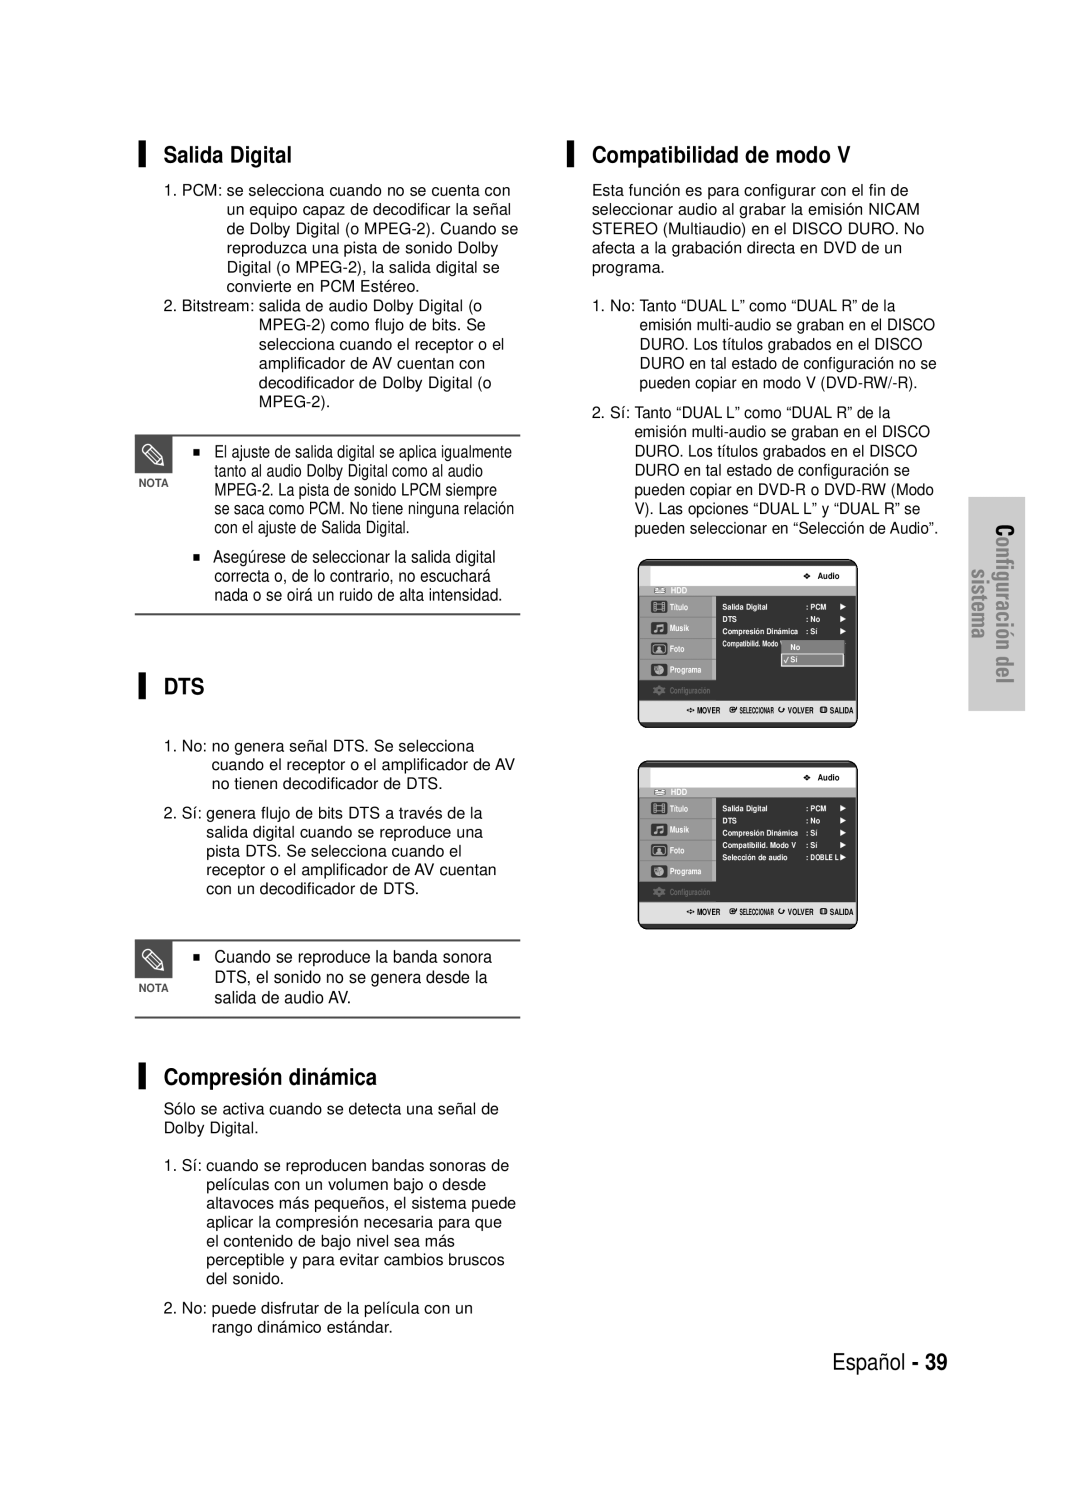 Samsung DVD-HR725/XEH, DVD-HR725/XEG, DVD-HR725/XEF Salida Digital, Compatibilidad de modo, Compresión dinámica, Español 